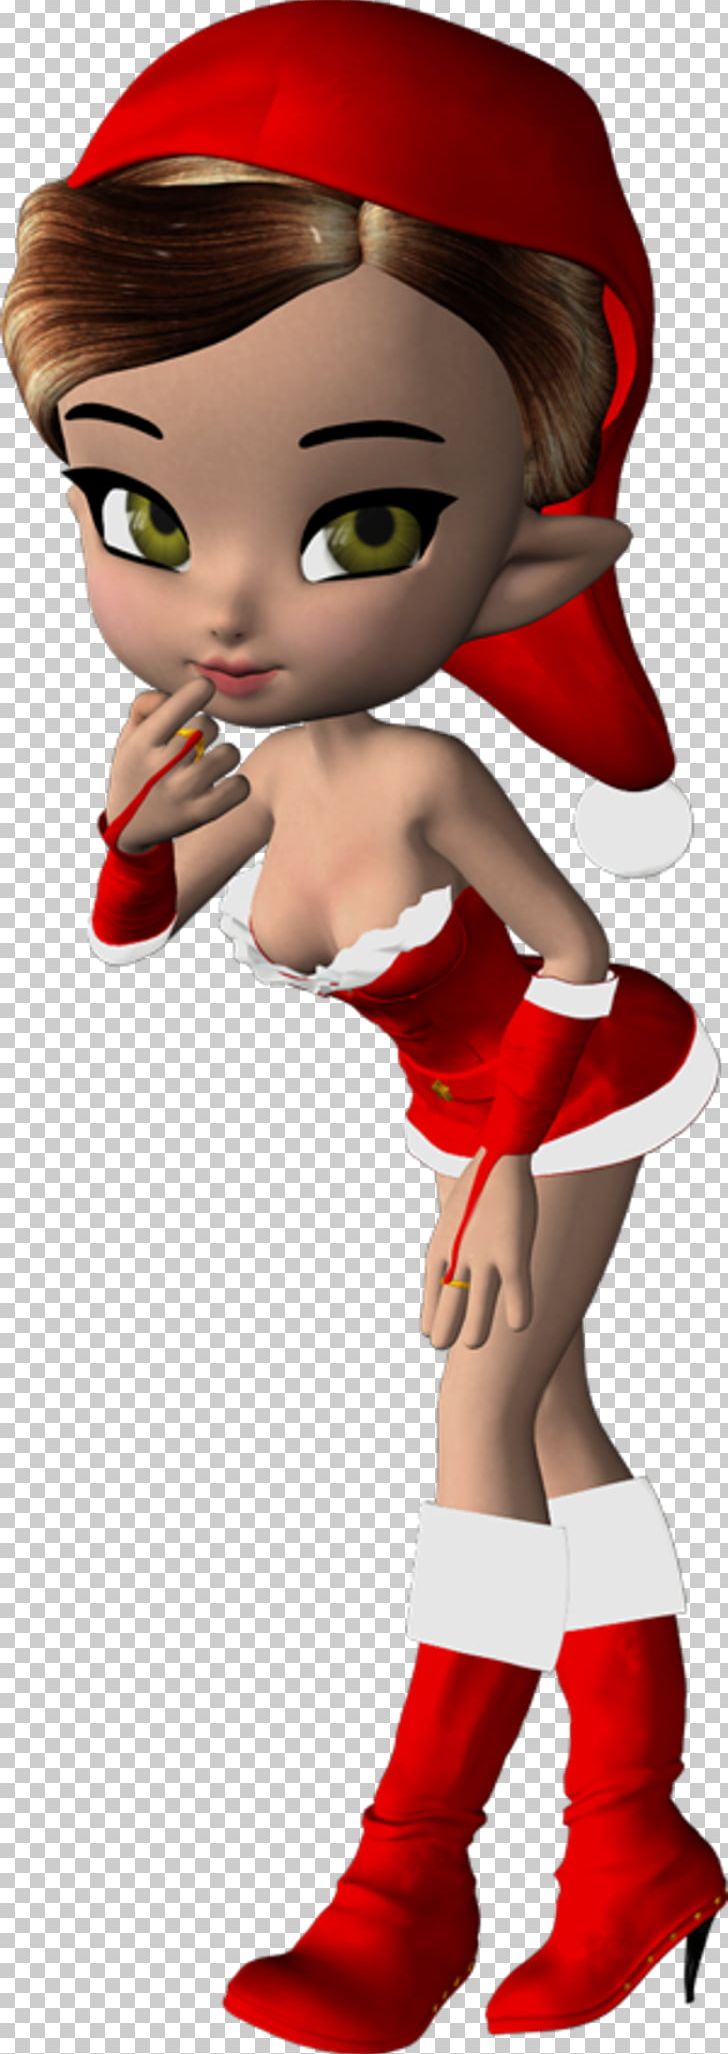 Mrs. Claus Santa Claus Christmas Elf PNG, Clipart, Art, Brown Hair, Cartoon, Christmas, Christmas Elf Free PNG Download